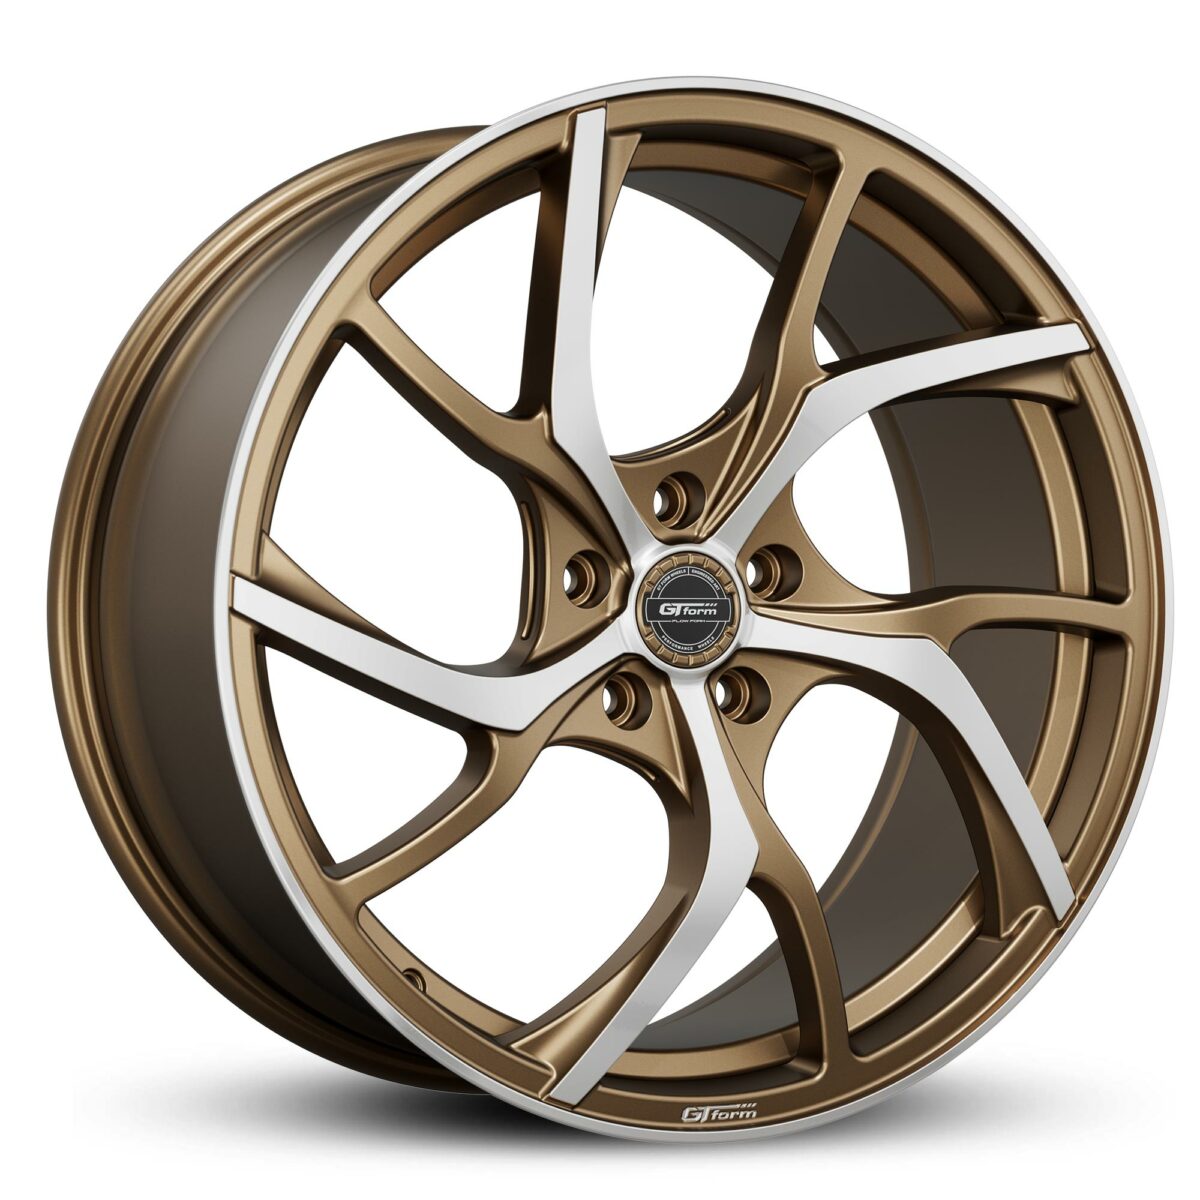 19" 20" Wheels GT Form Revert Bronze Machined Face Performance Rims